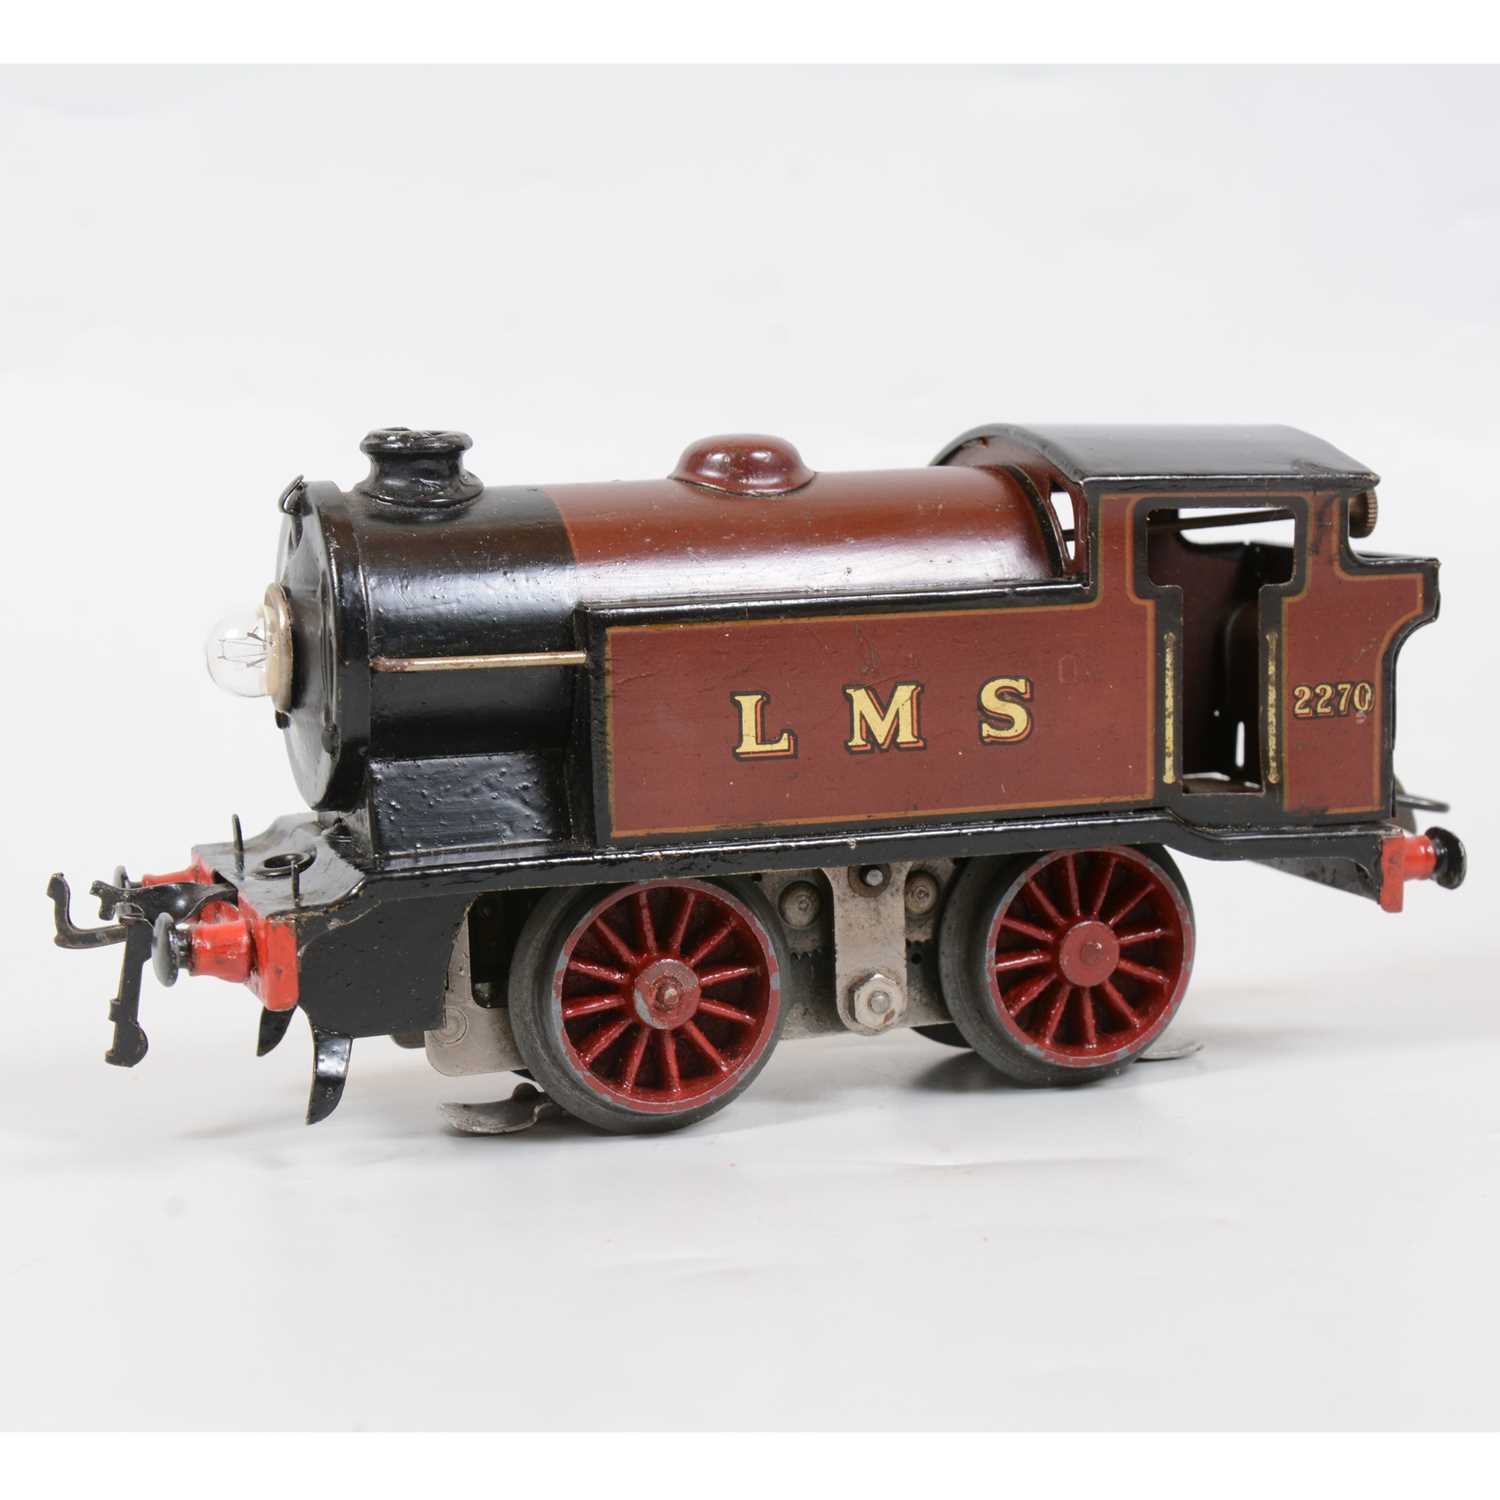 Lot 21 - Hornby O gauge model railway tank locomotive, EM320 LMS 0-4-0, maroon, 2270.